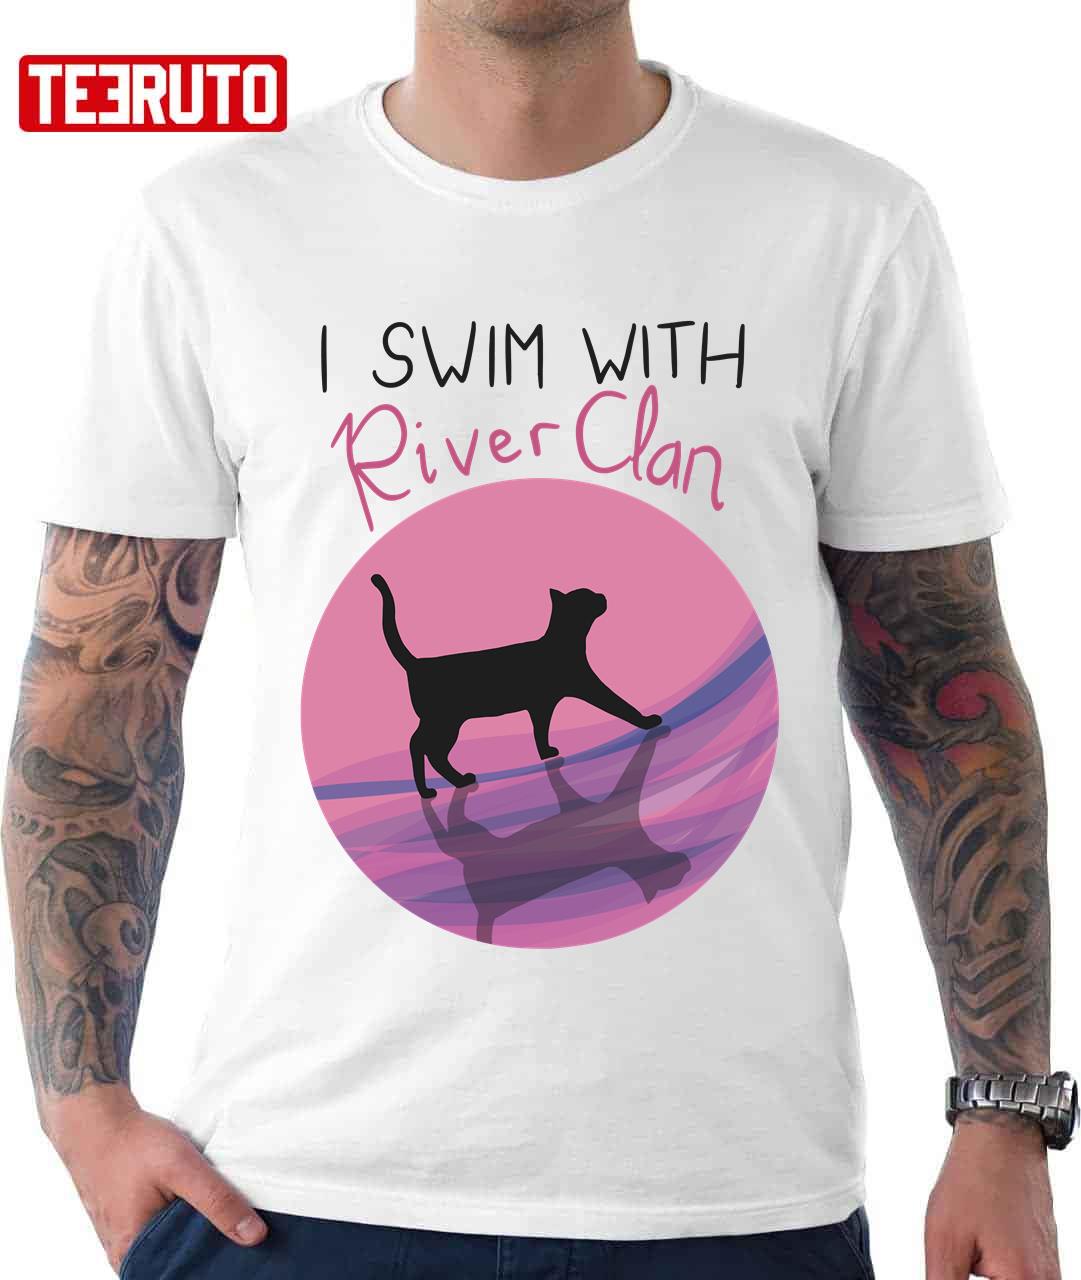 Riverclan Pride Black Cat Silhouette Unisex T-Shirt